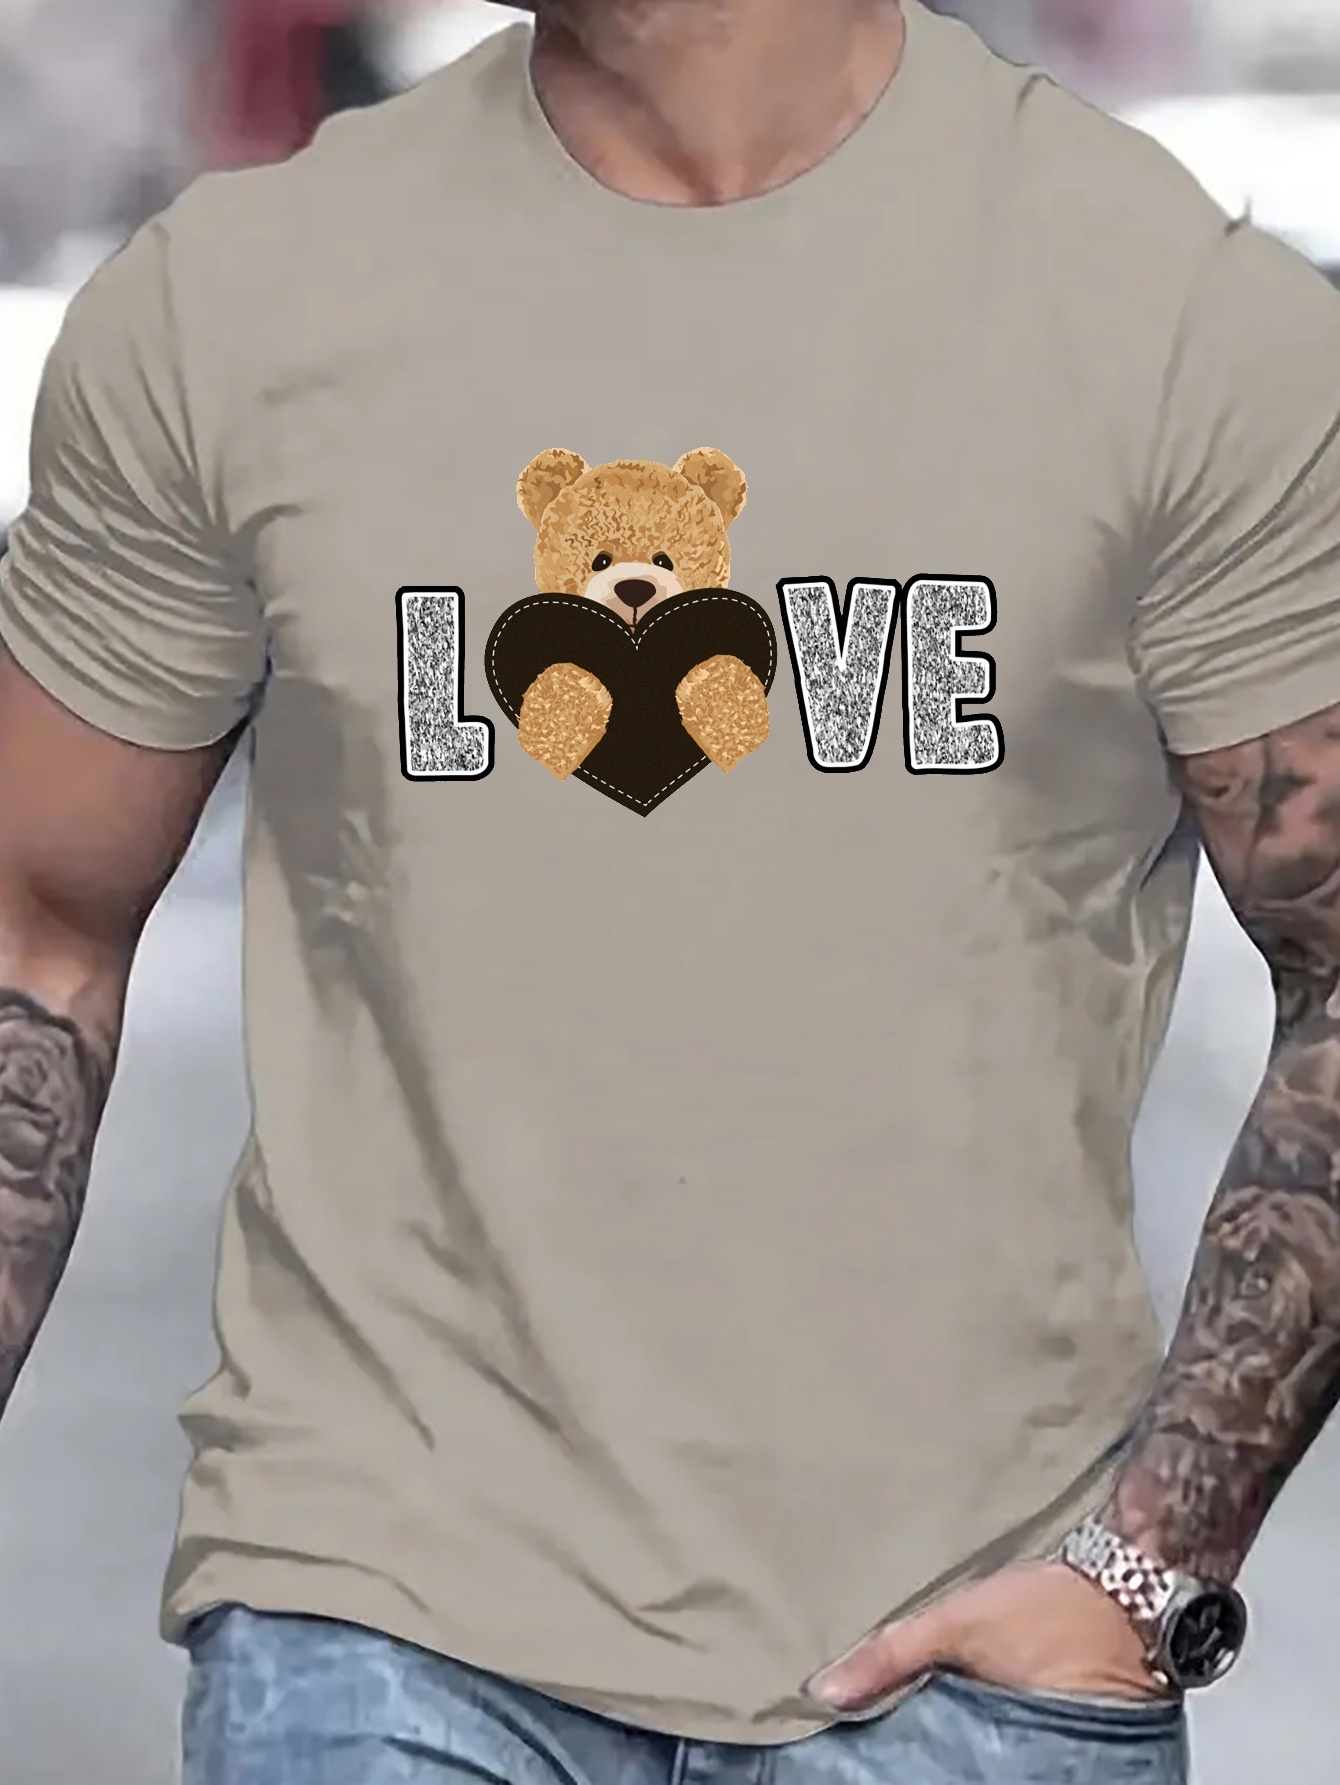 Ethan Bear Jerseys, Ethan Bear T-Shirts, Gear